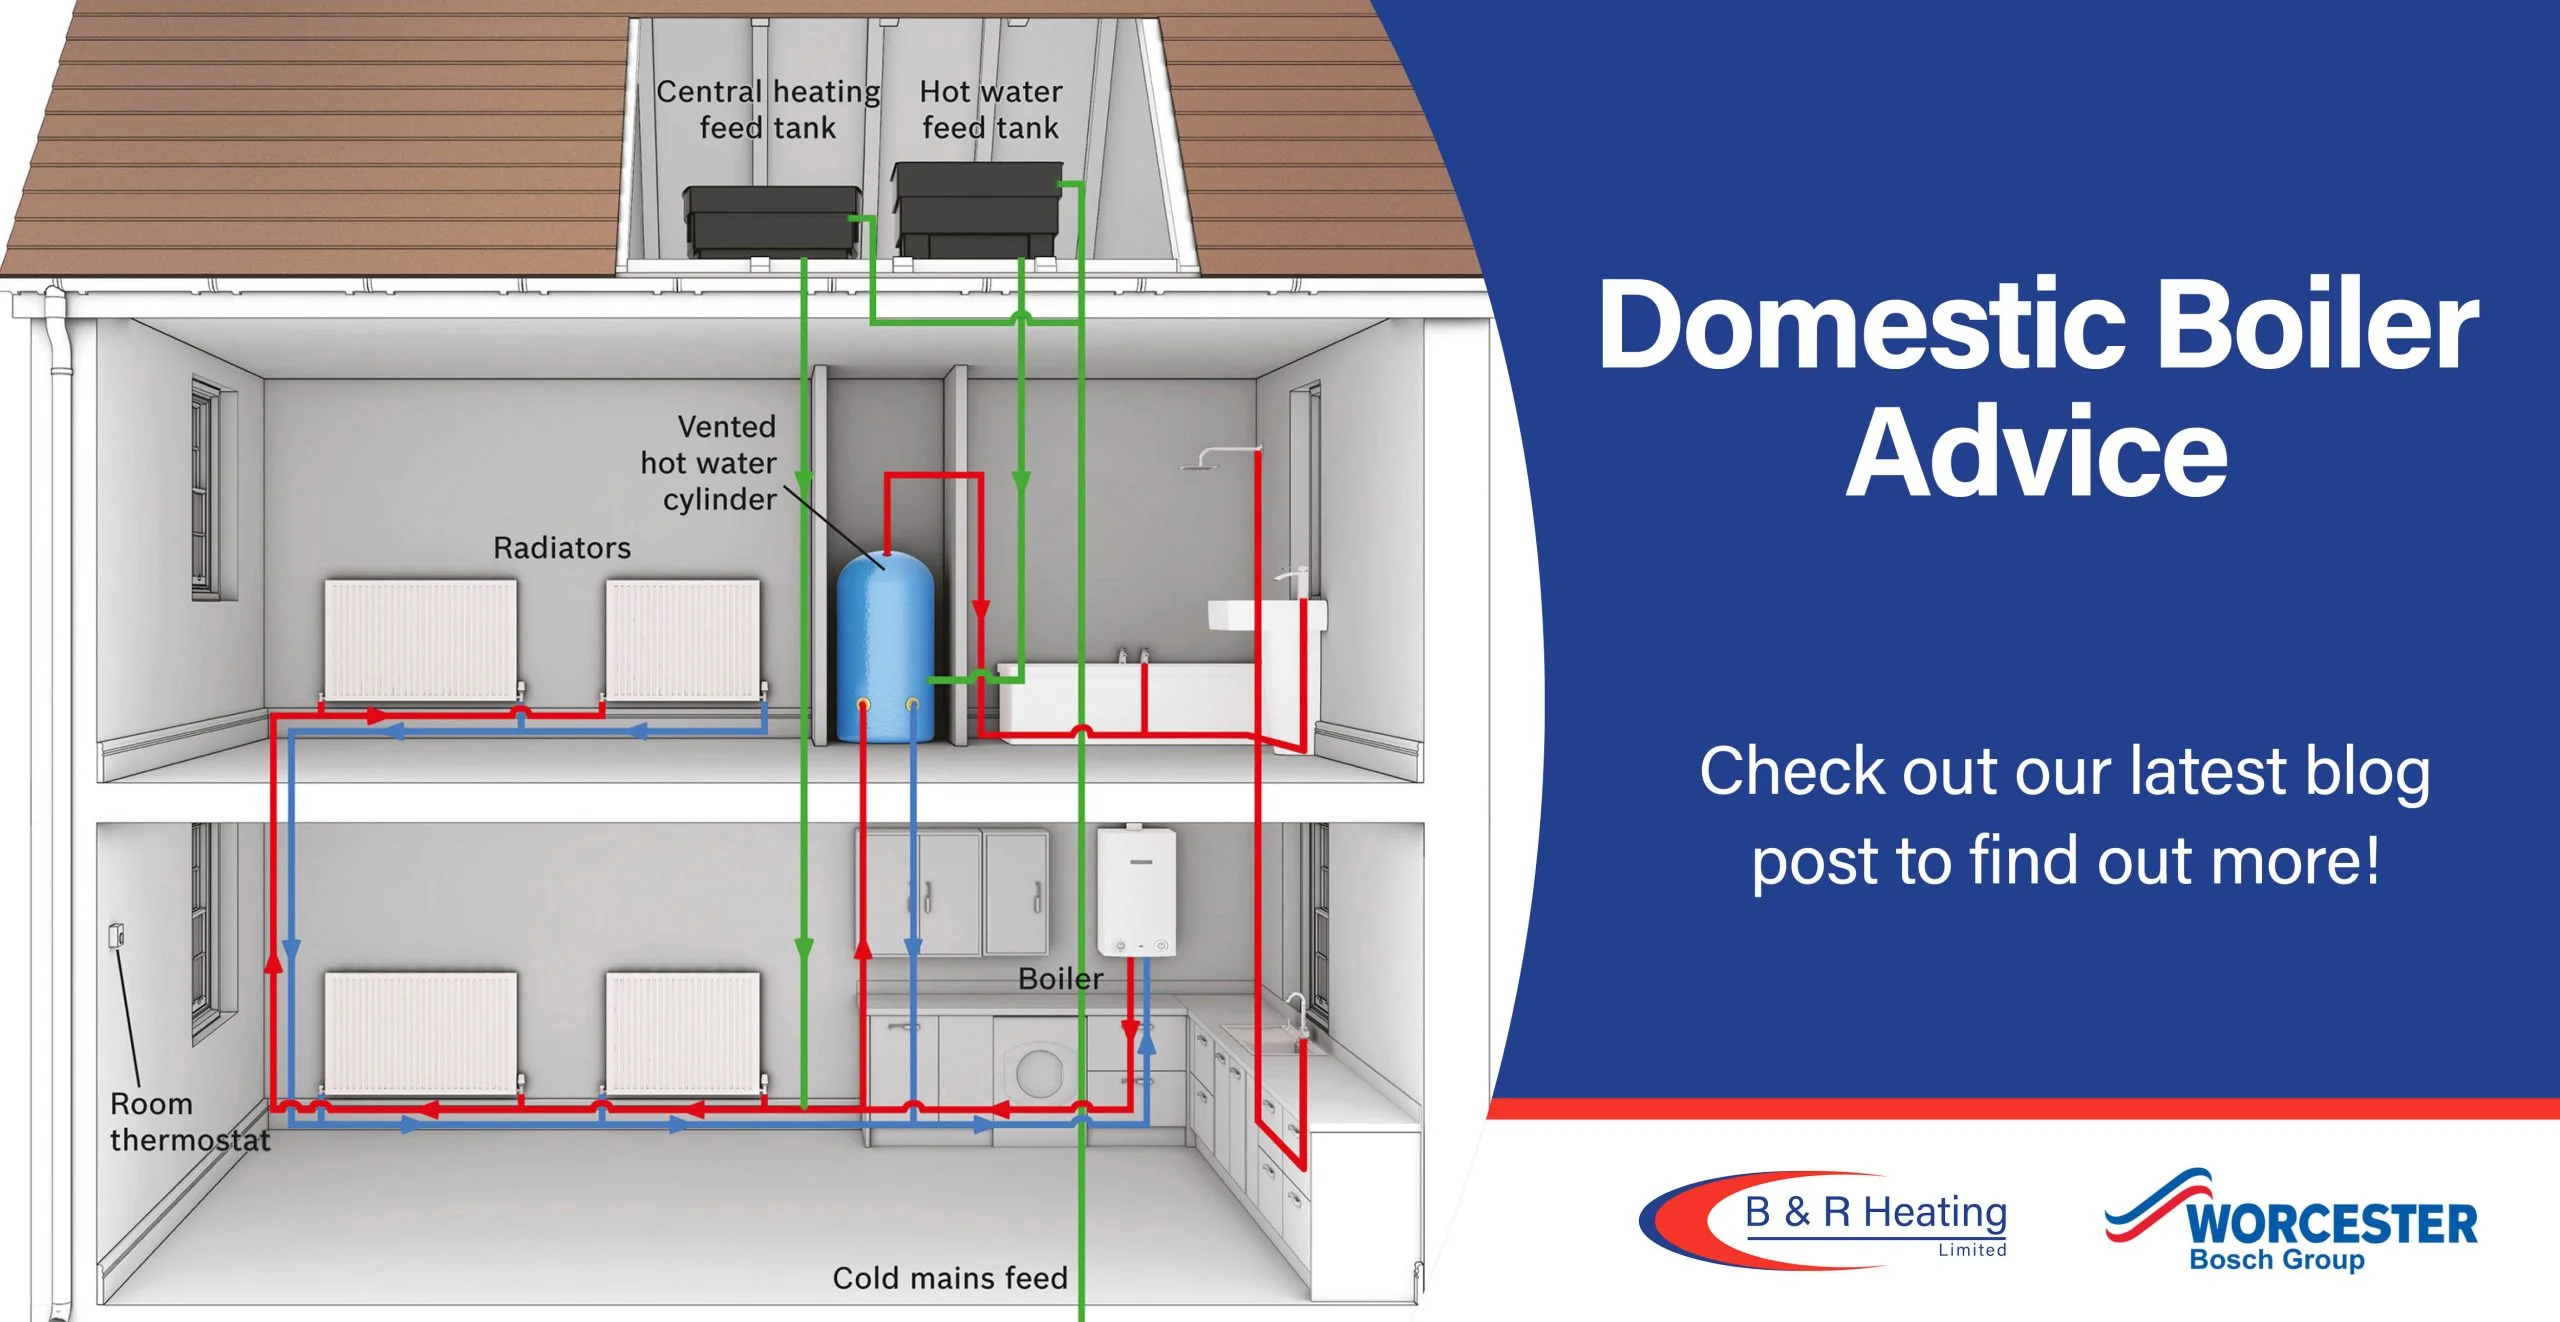 Domestic boiler advice blog post by B&R Heating Ltd